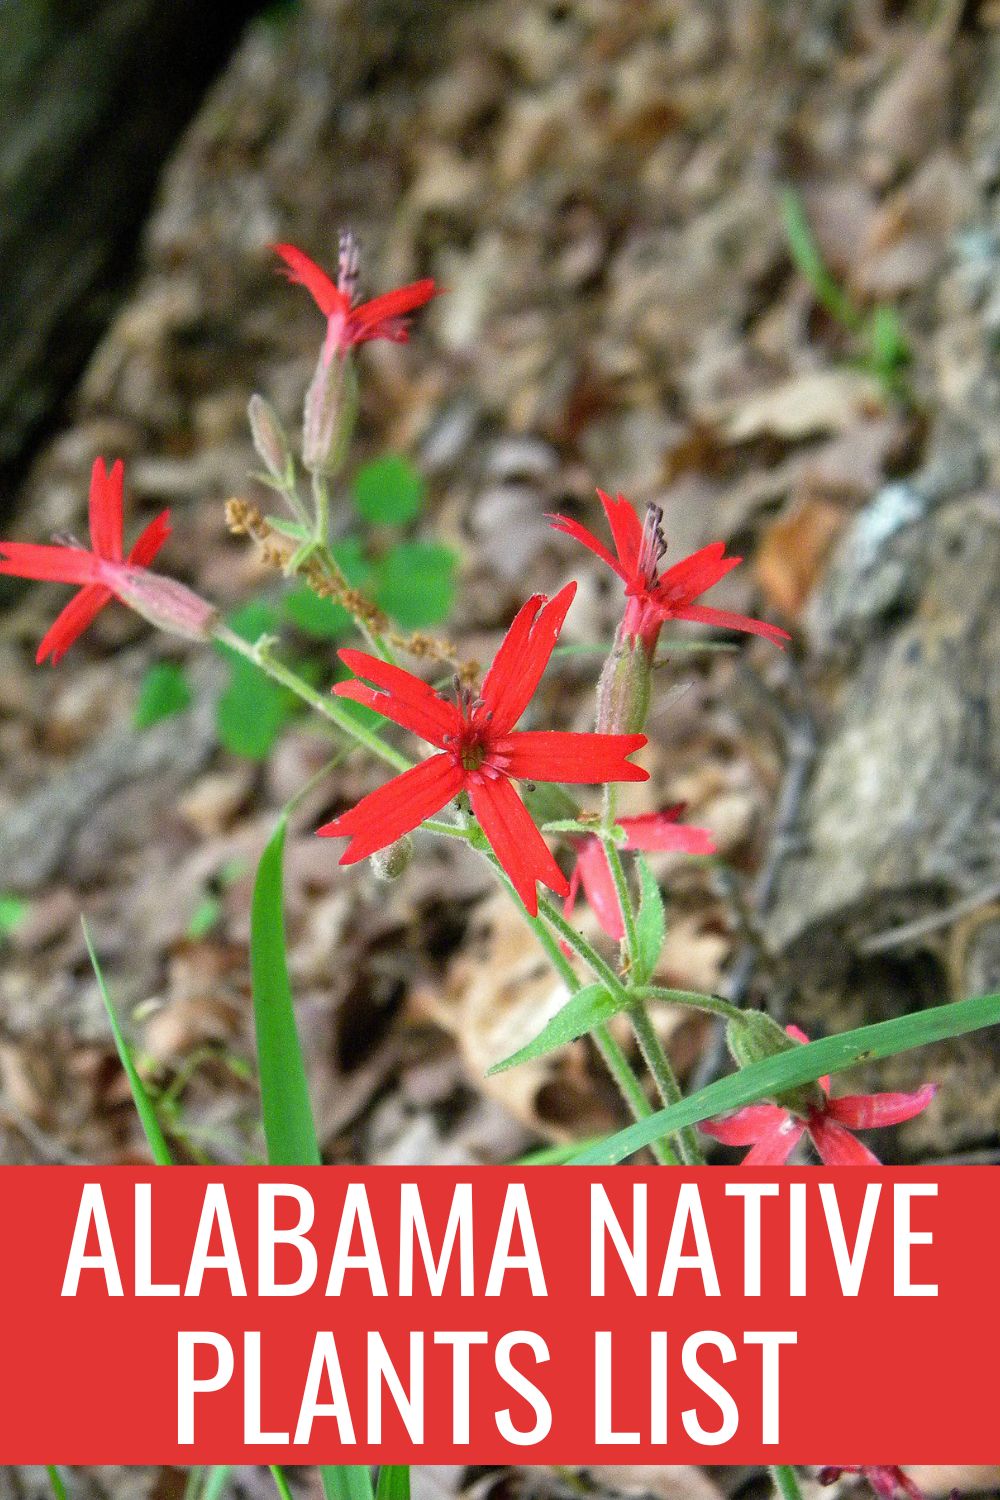 Alabama native plants list.